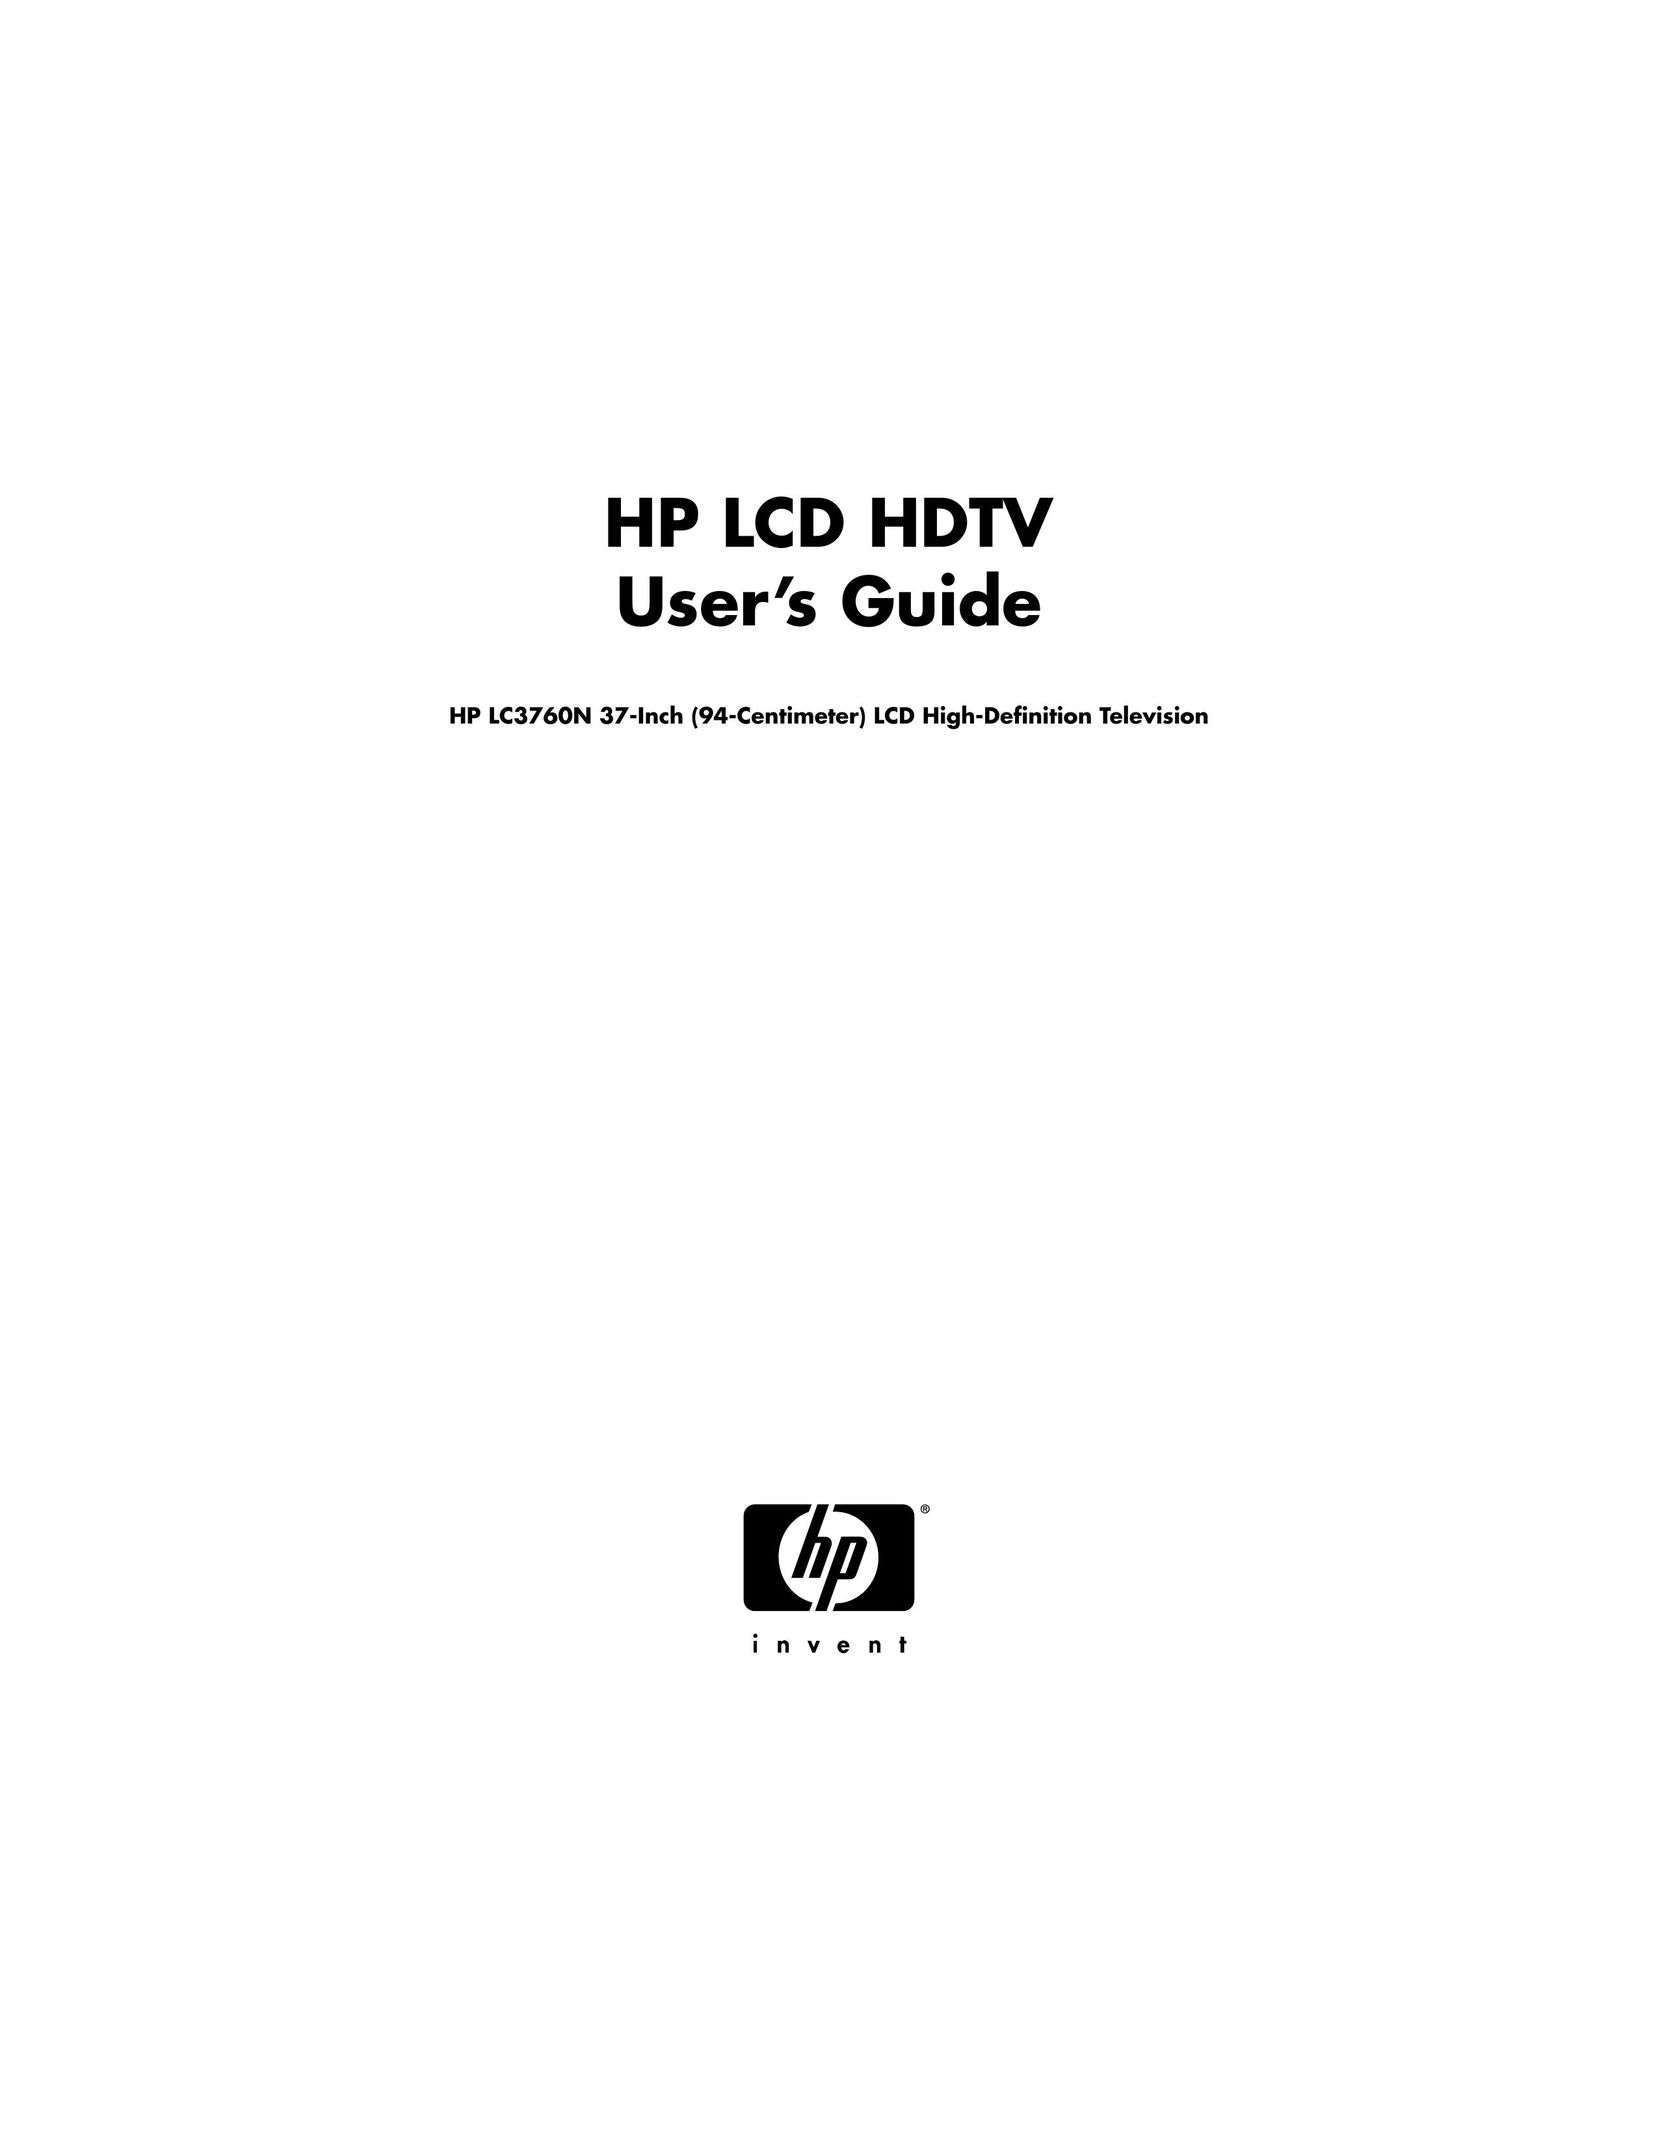 HP (Hewlett-Packard) LC3760N Flat Panel Television User Manual